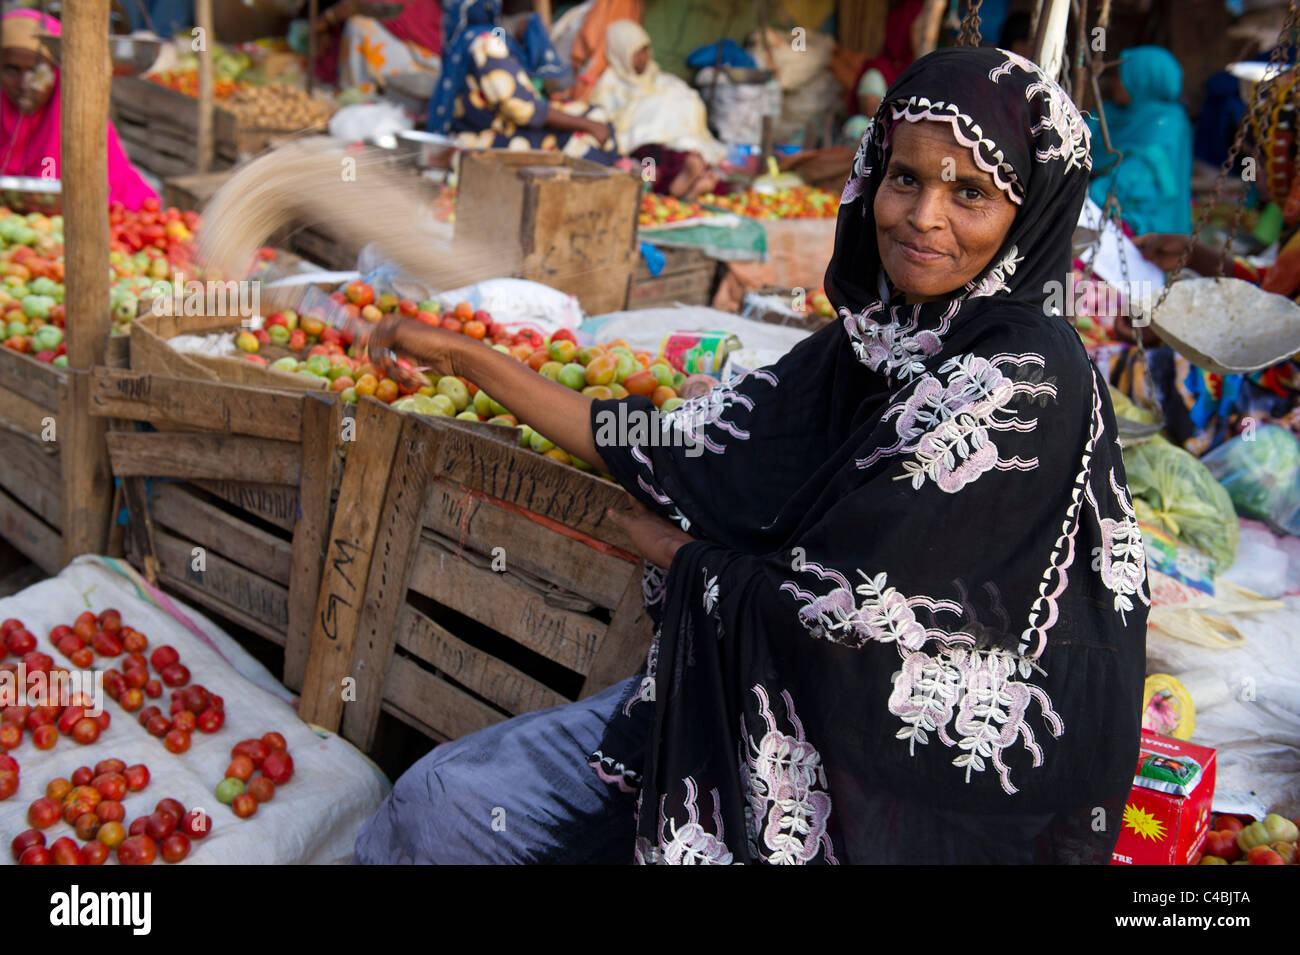 Woman selling tomatoes in the market, Hargeisa, Somaliland, Somalia Stock Photo